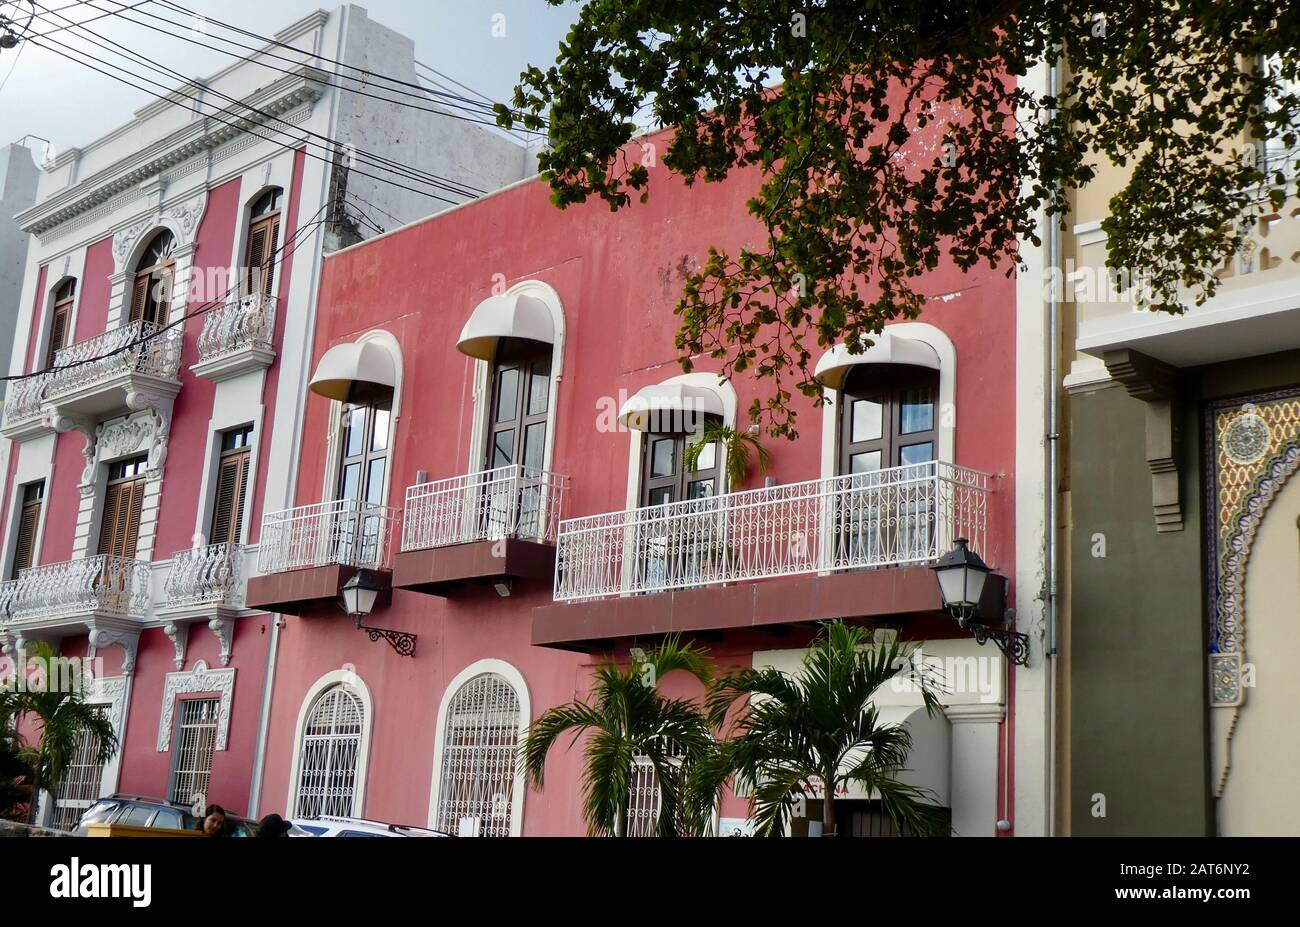 The beautiful ornate balconies of Old San Juan Puerto Rico Stock Photo